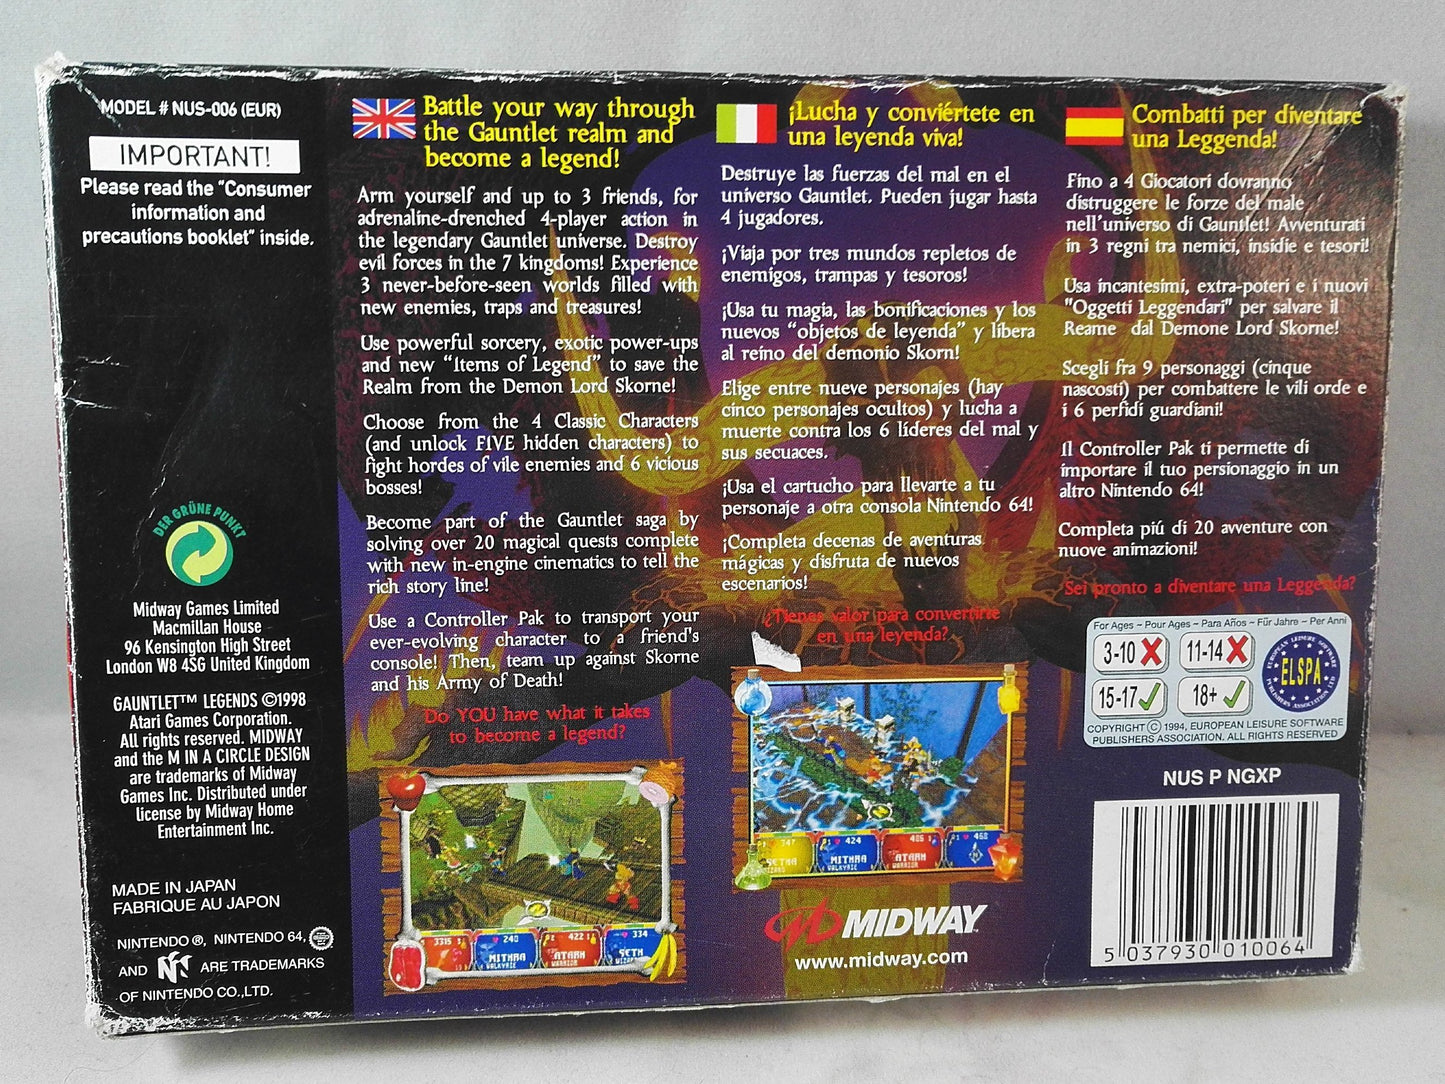 Gauntlet Legends (Nintendo 64) Boxed Game